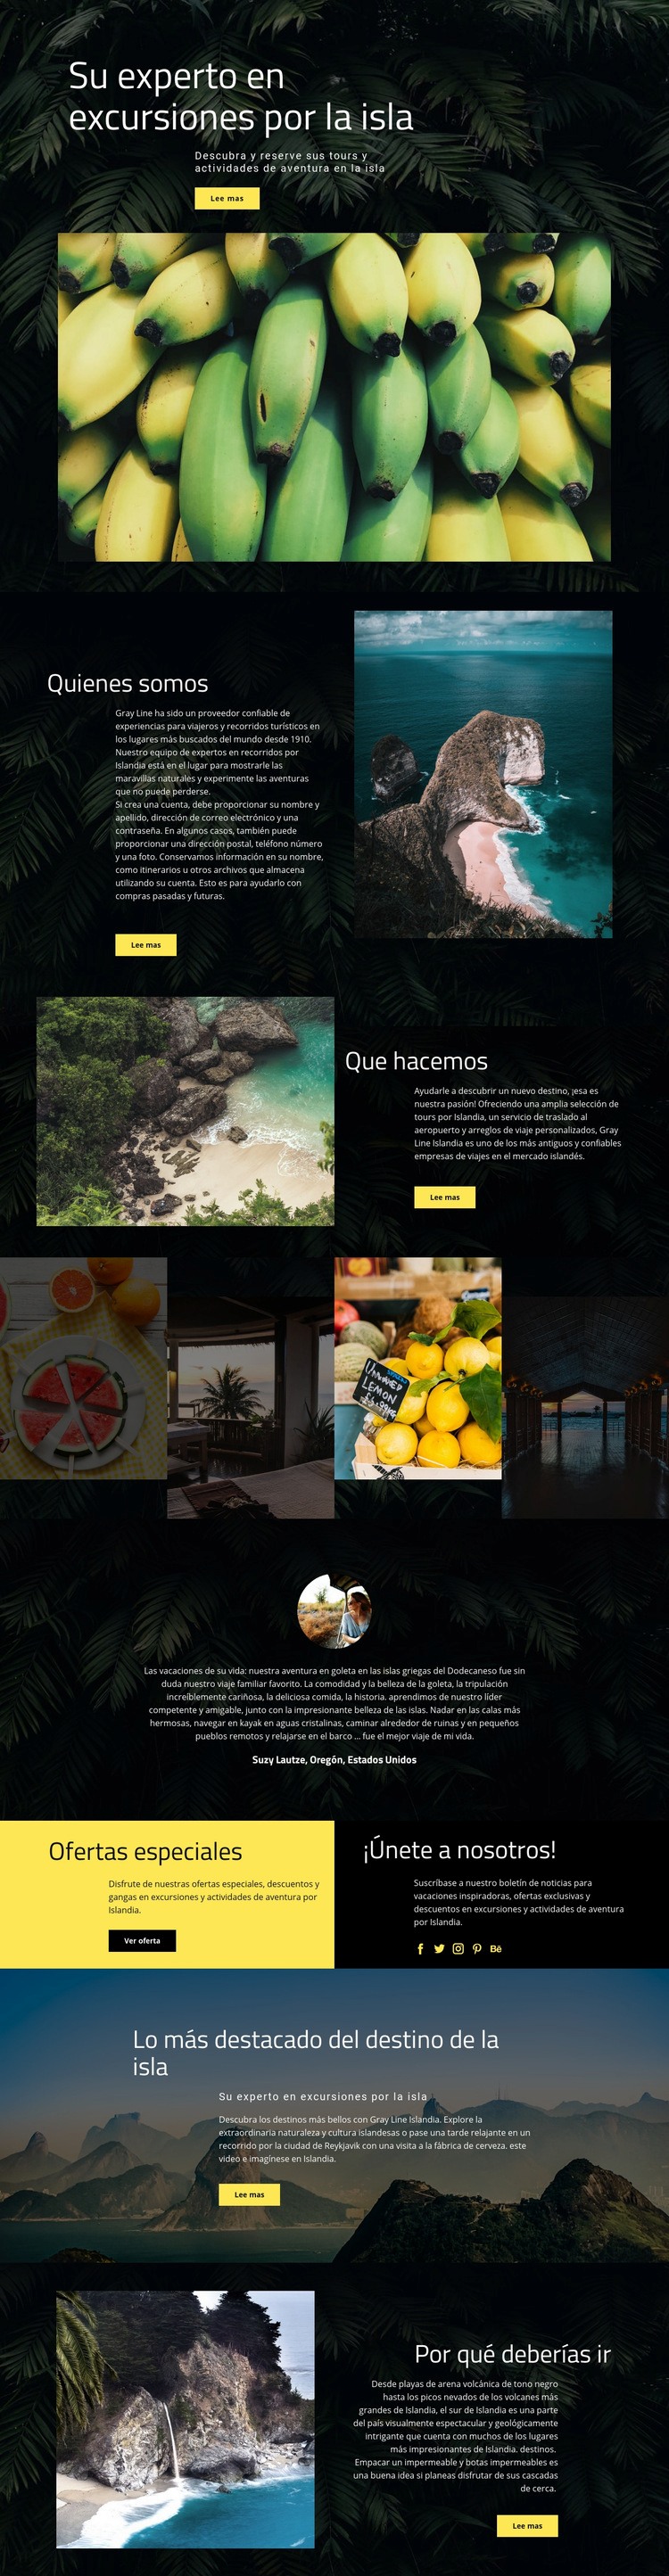 Viaje a la isla Plantilla HTML5